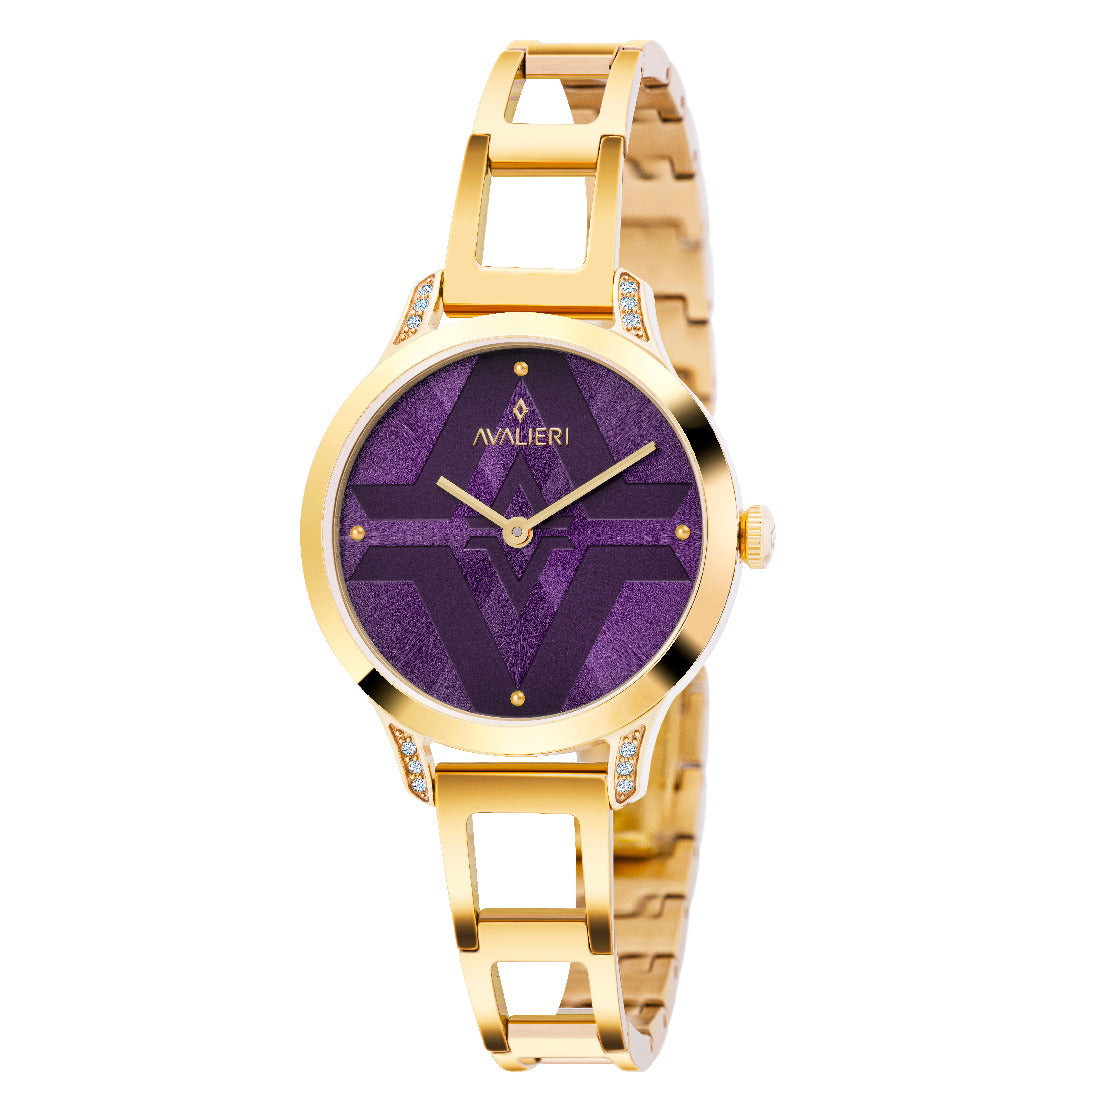 Avalieri Women's Quartz Watch Purple Dial - AV-2507B